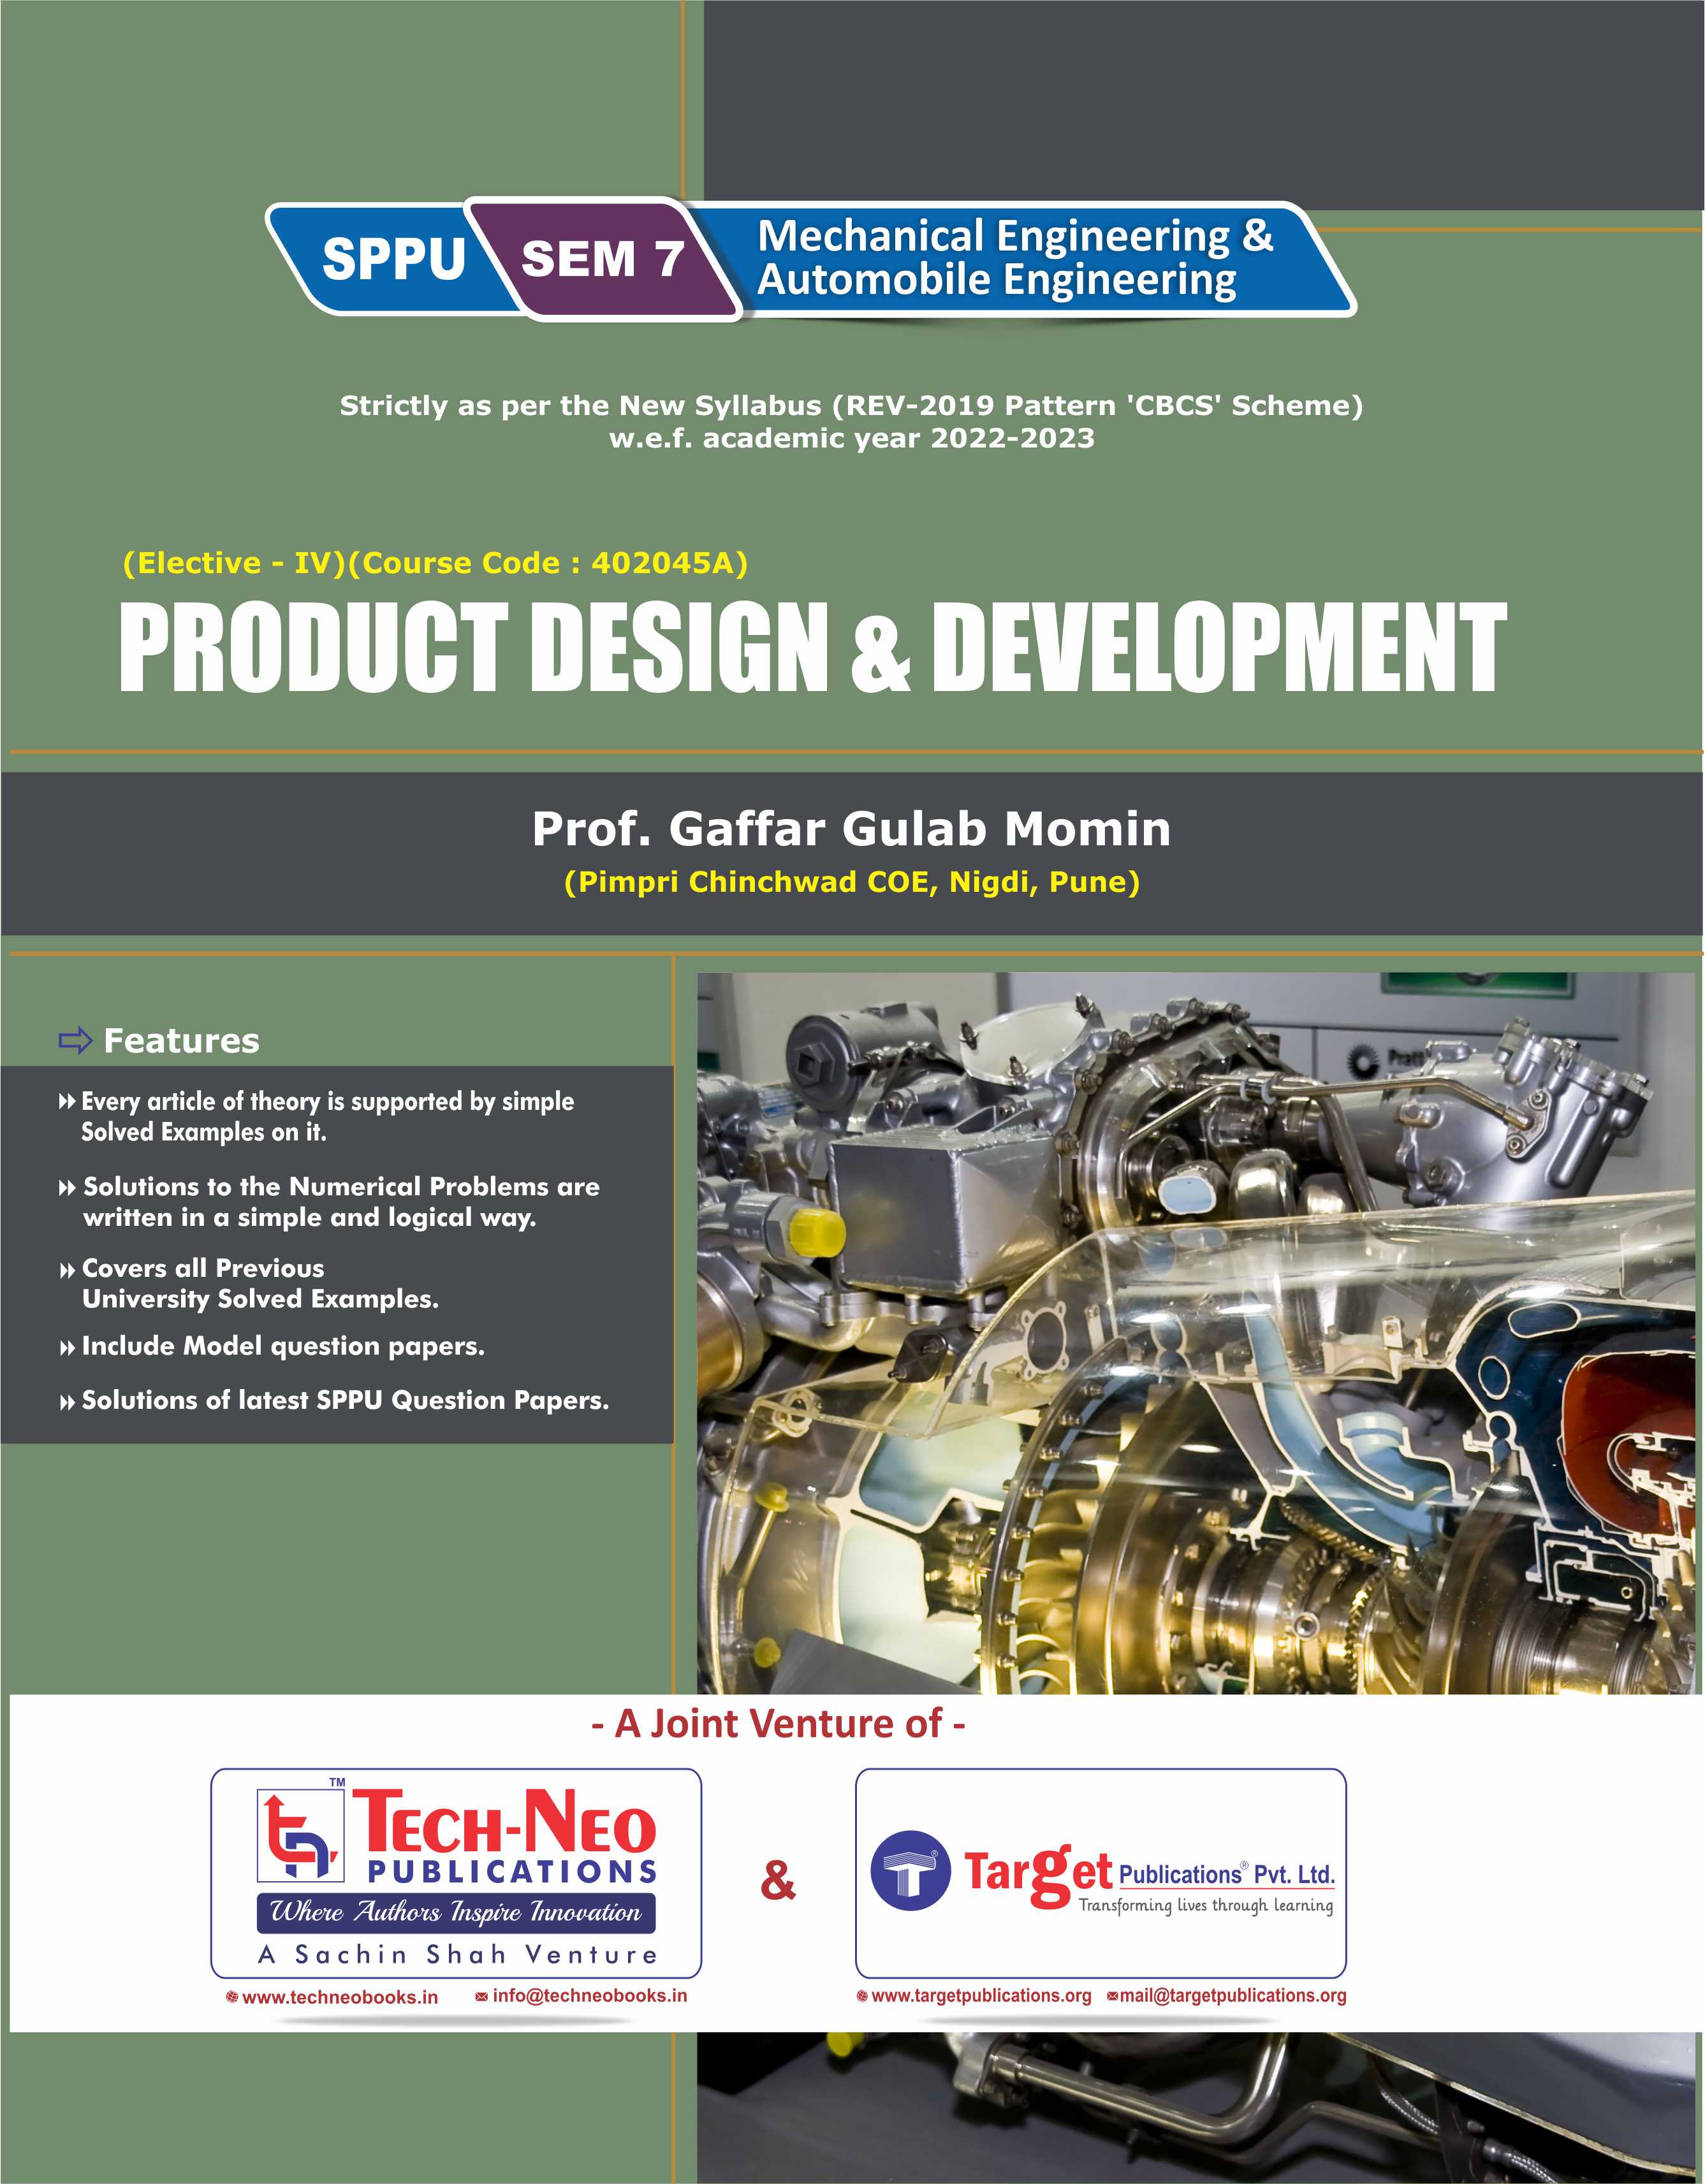 Product Design & Development